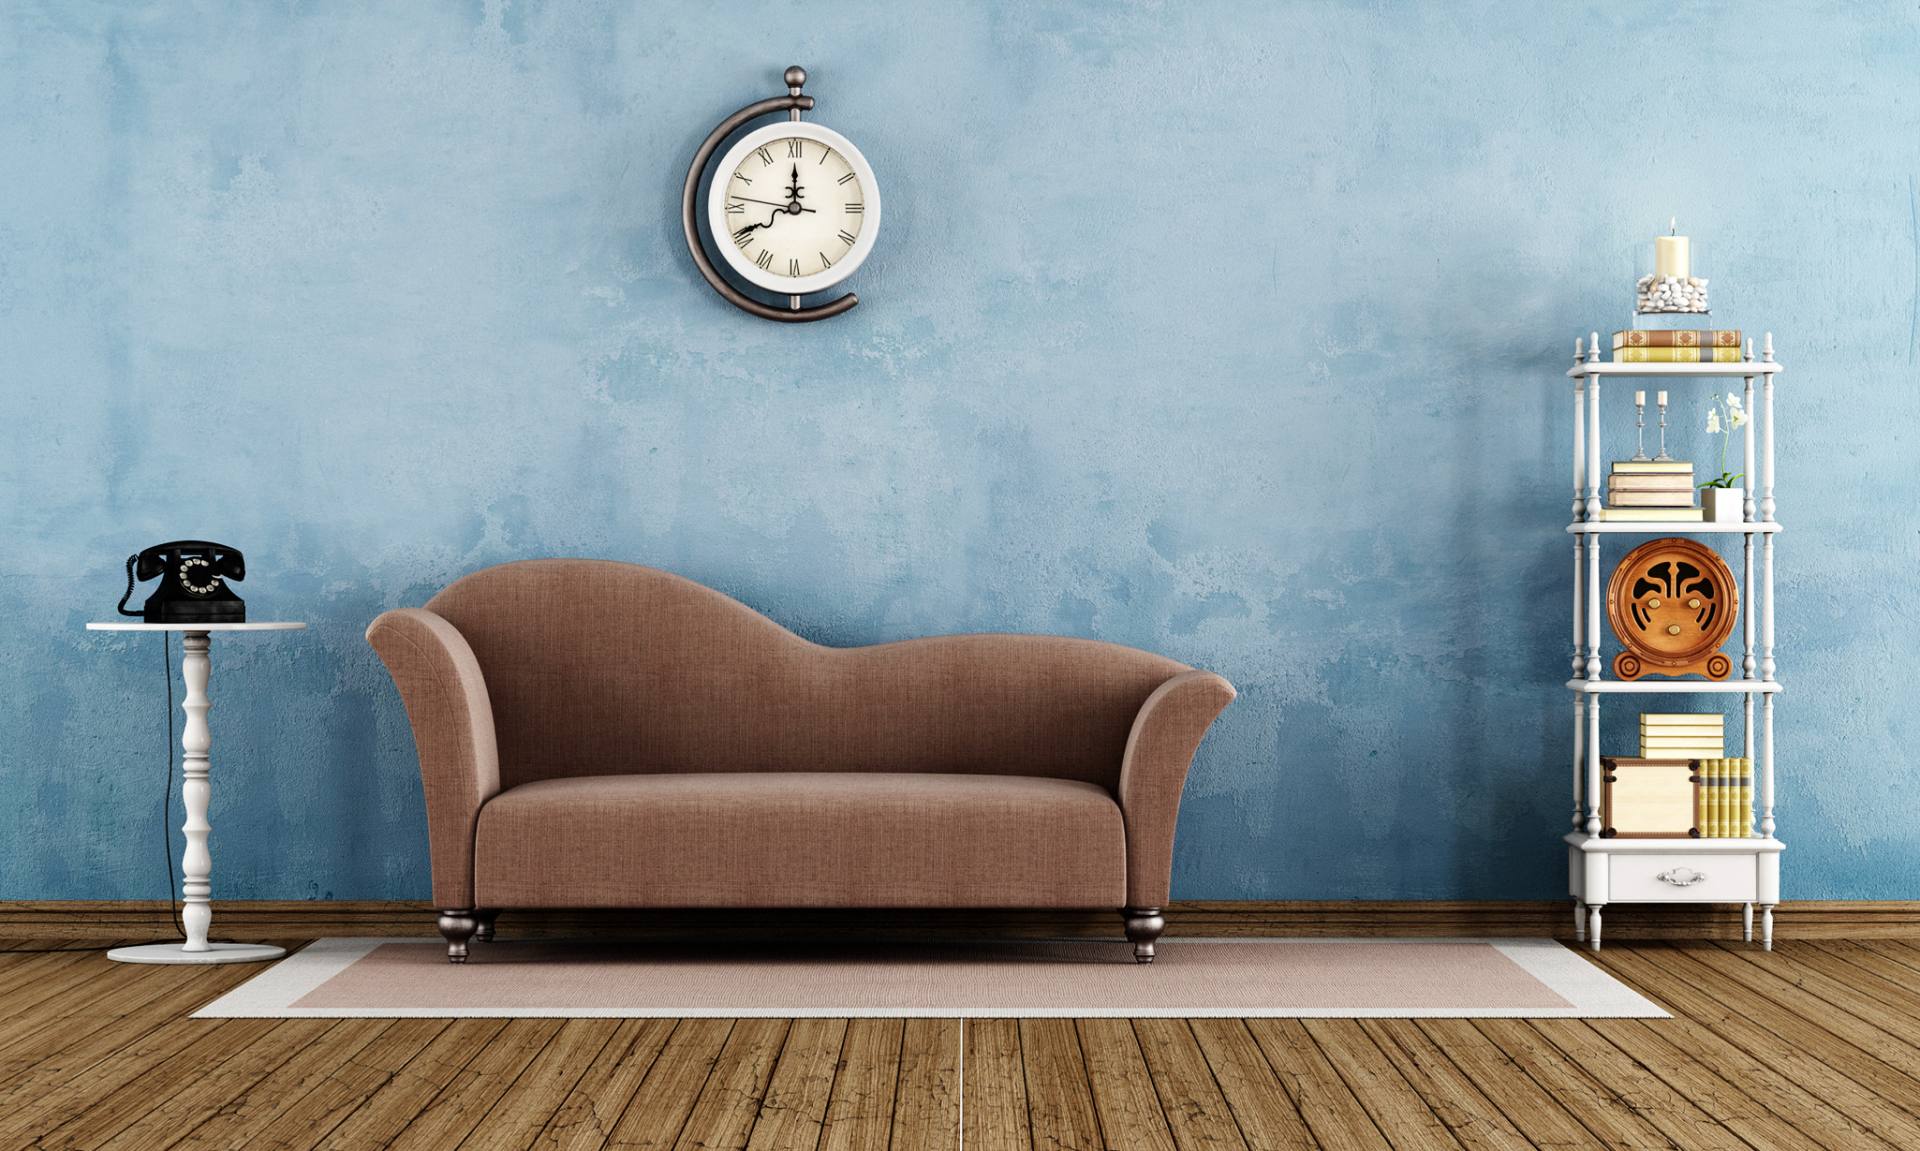 5 beginnerstips voor vintage meubels – ElsaRblog